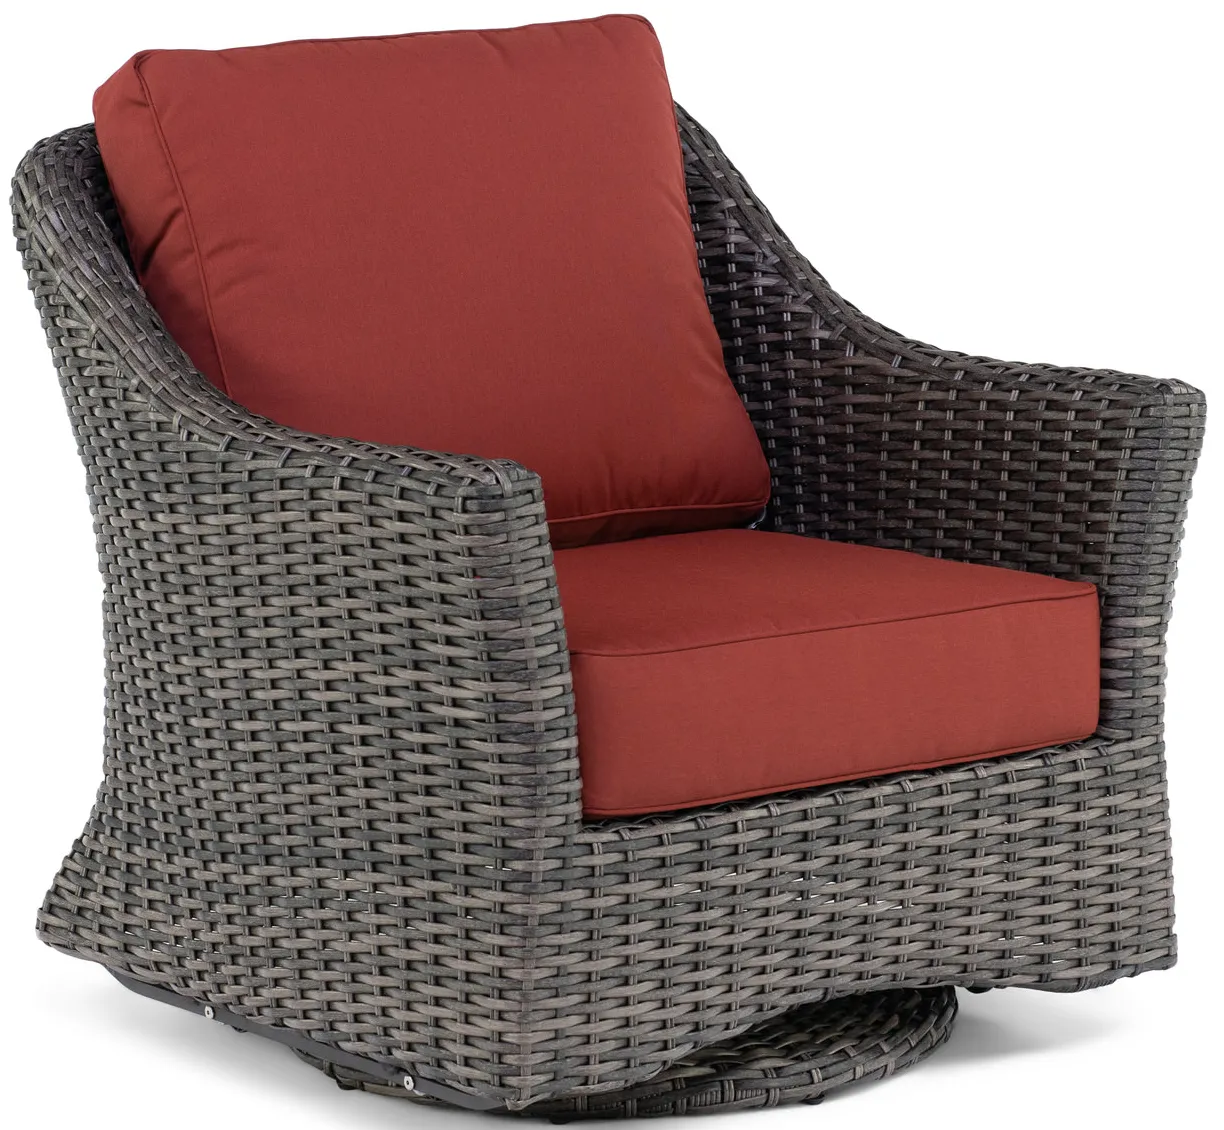 The Bay Wicker Swivel Glider Lounge Chair